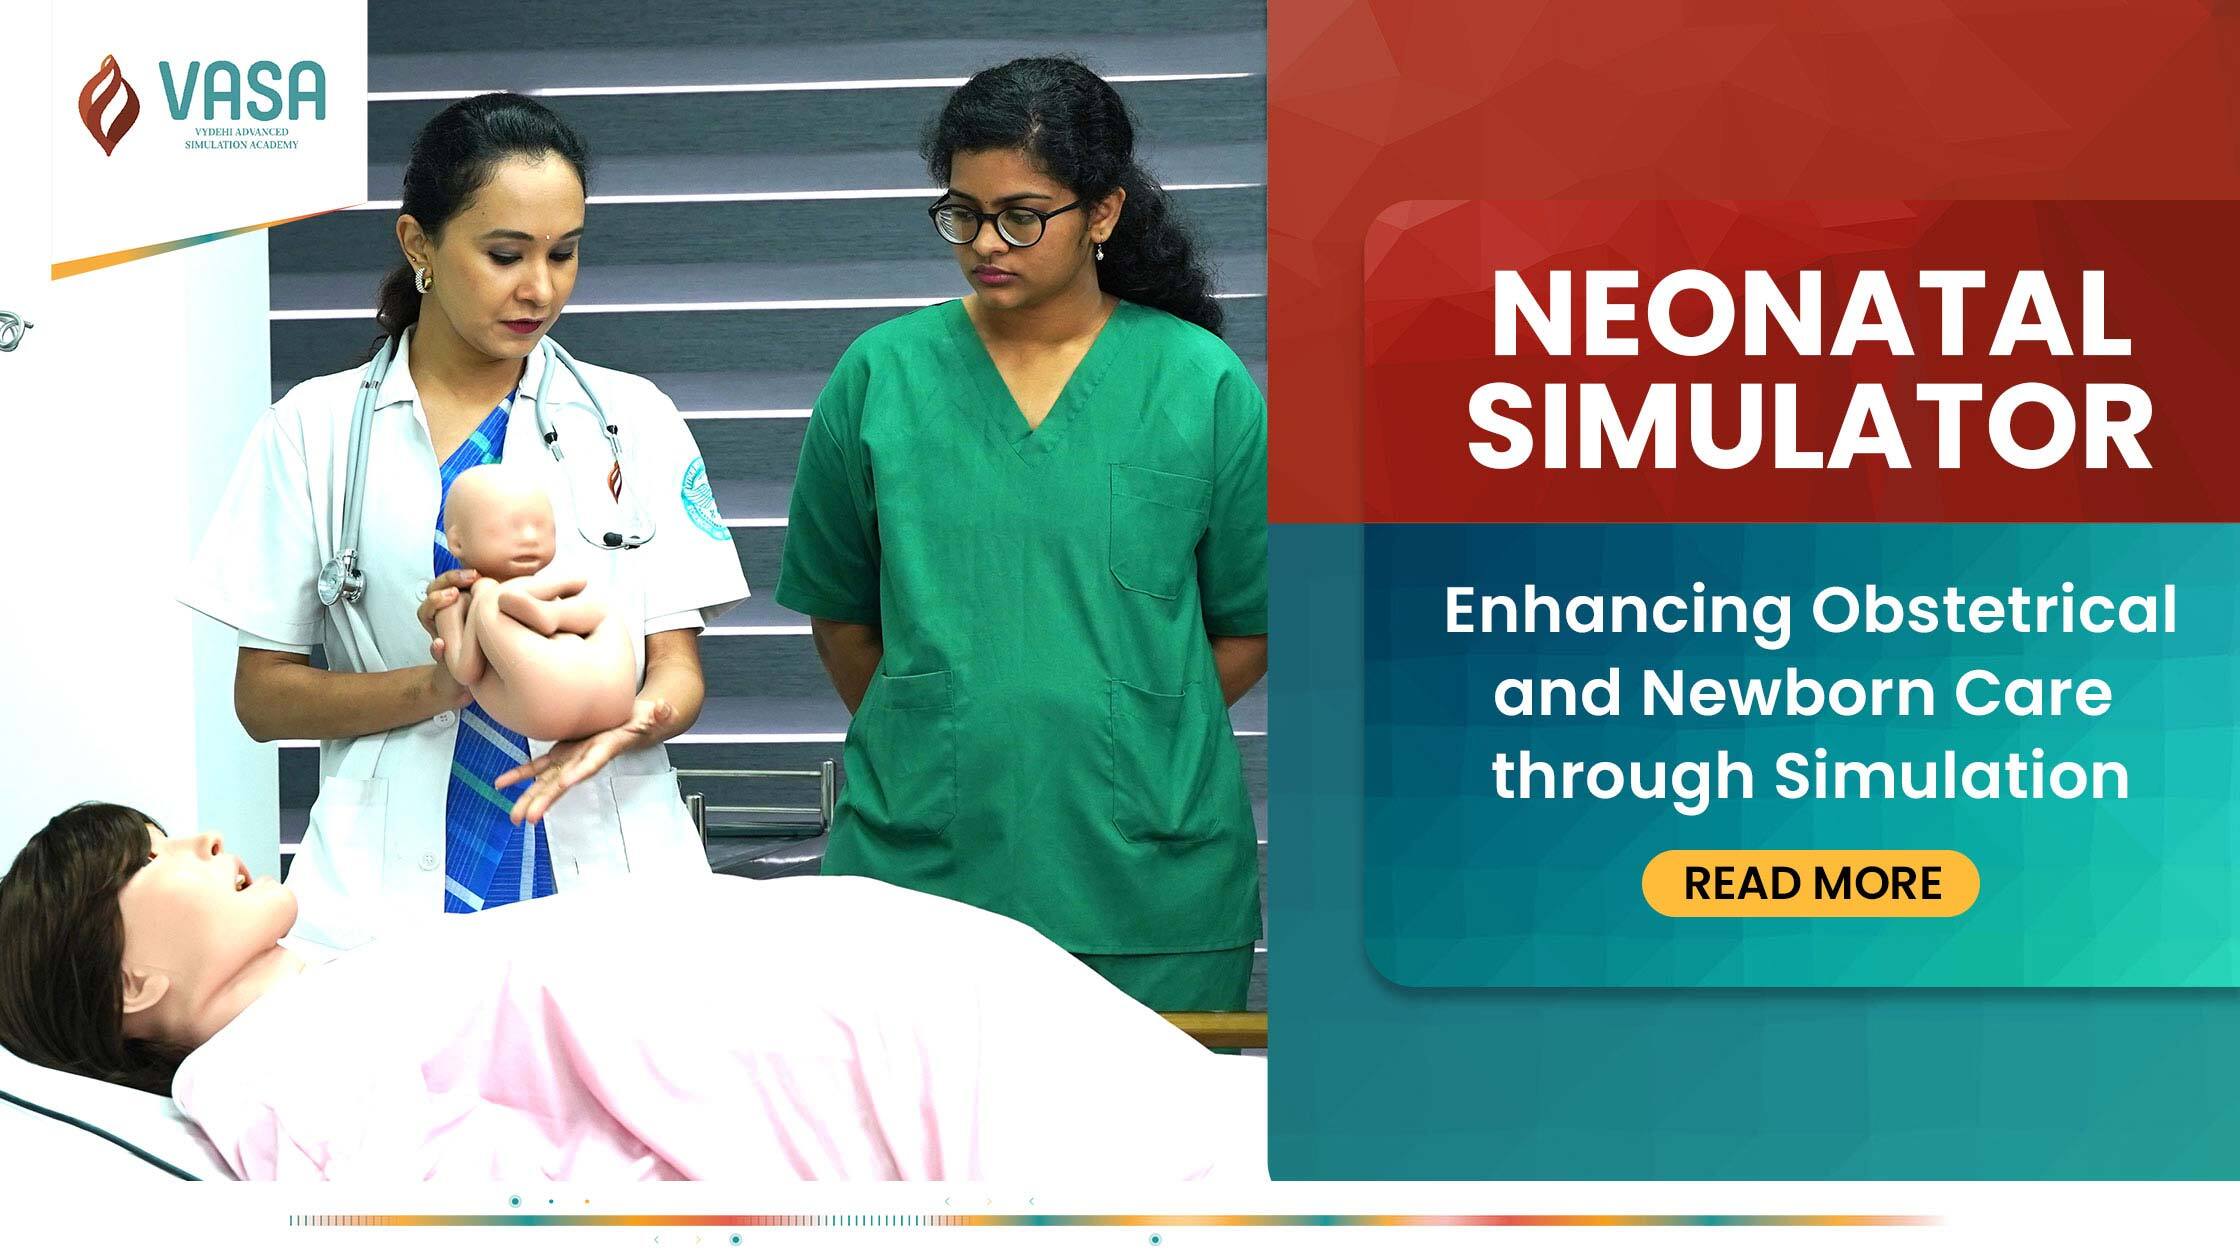 Neonatal Simulator: Enhancing Obstetrical and Newborn Care through Simulation